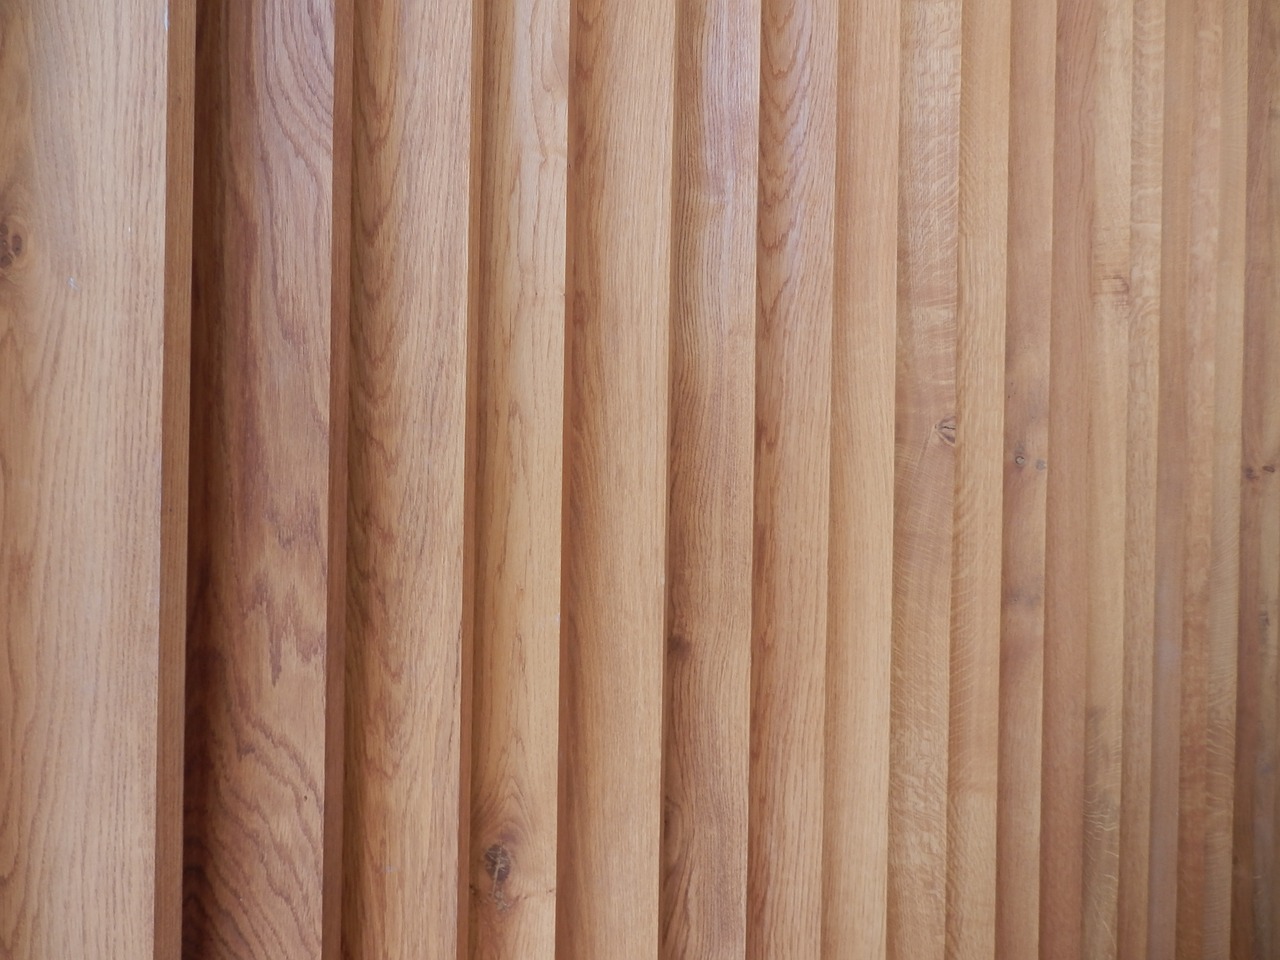 wood bar texture free photo